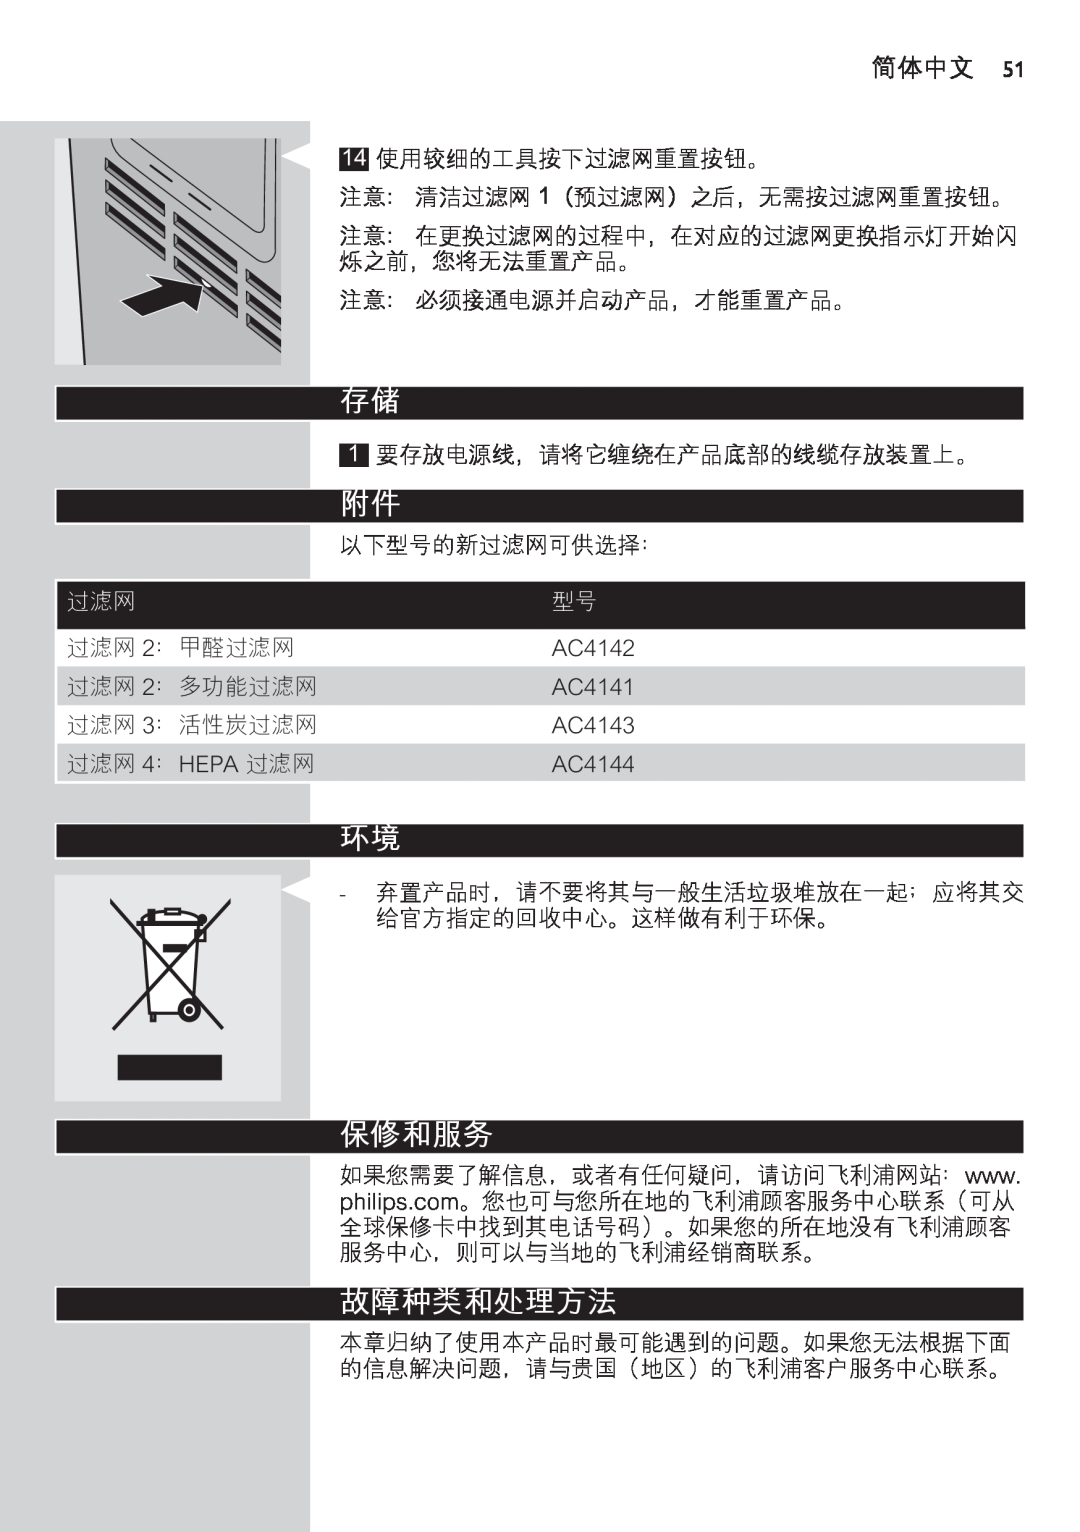 Philips AC4074 manual 保修和服务, 故障种类和处理方法, 简体中文 